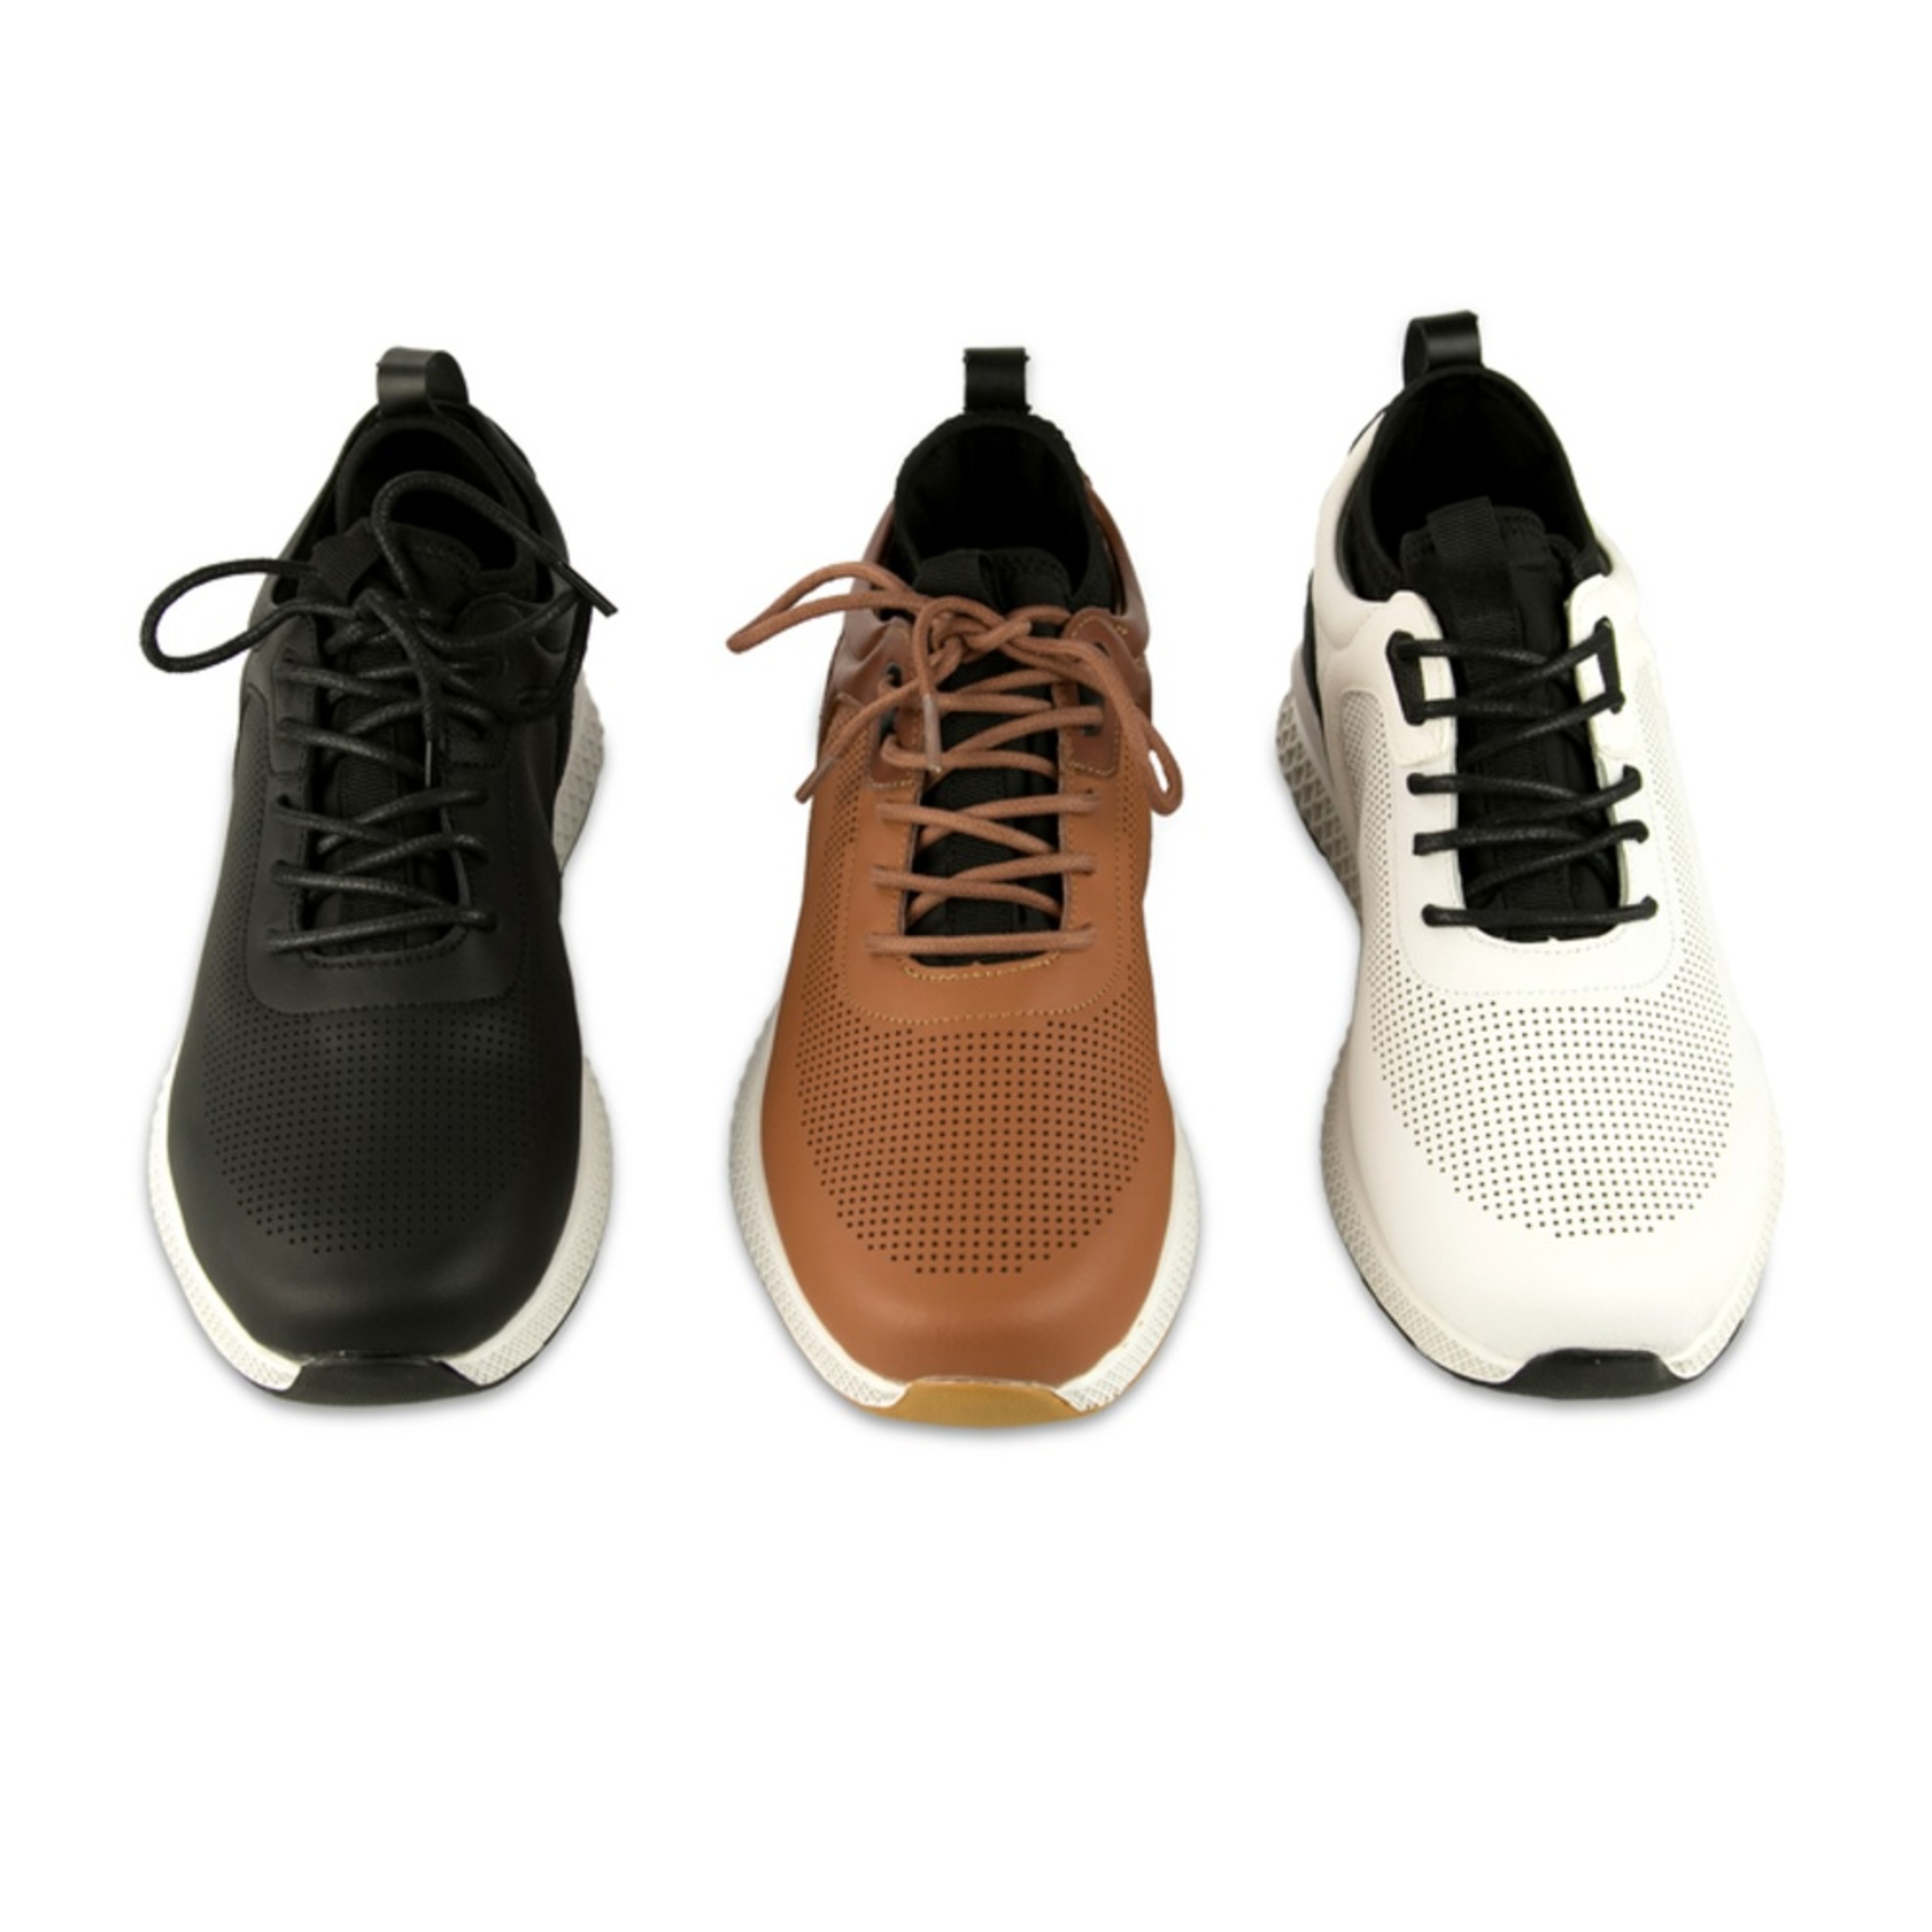 Sapatos De Golfe Masculino Sapatos Desportivos Sapatos De Couro - Preto/Branco - Sapatos de golfe para homens sapatos de couro | Sport Zone MKP